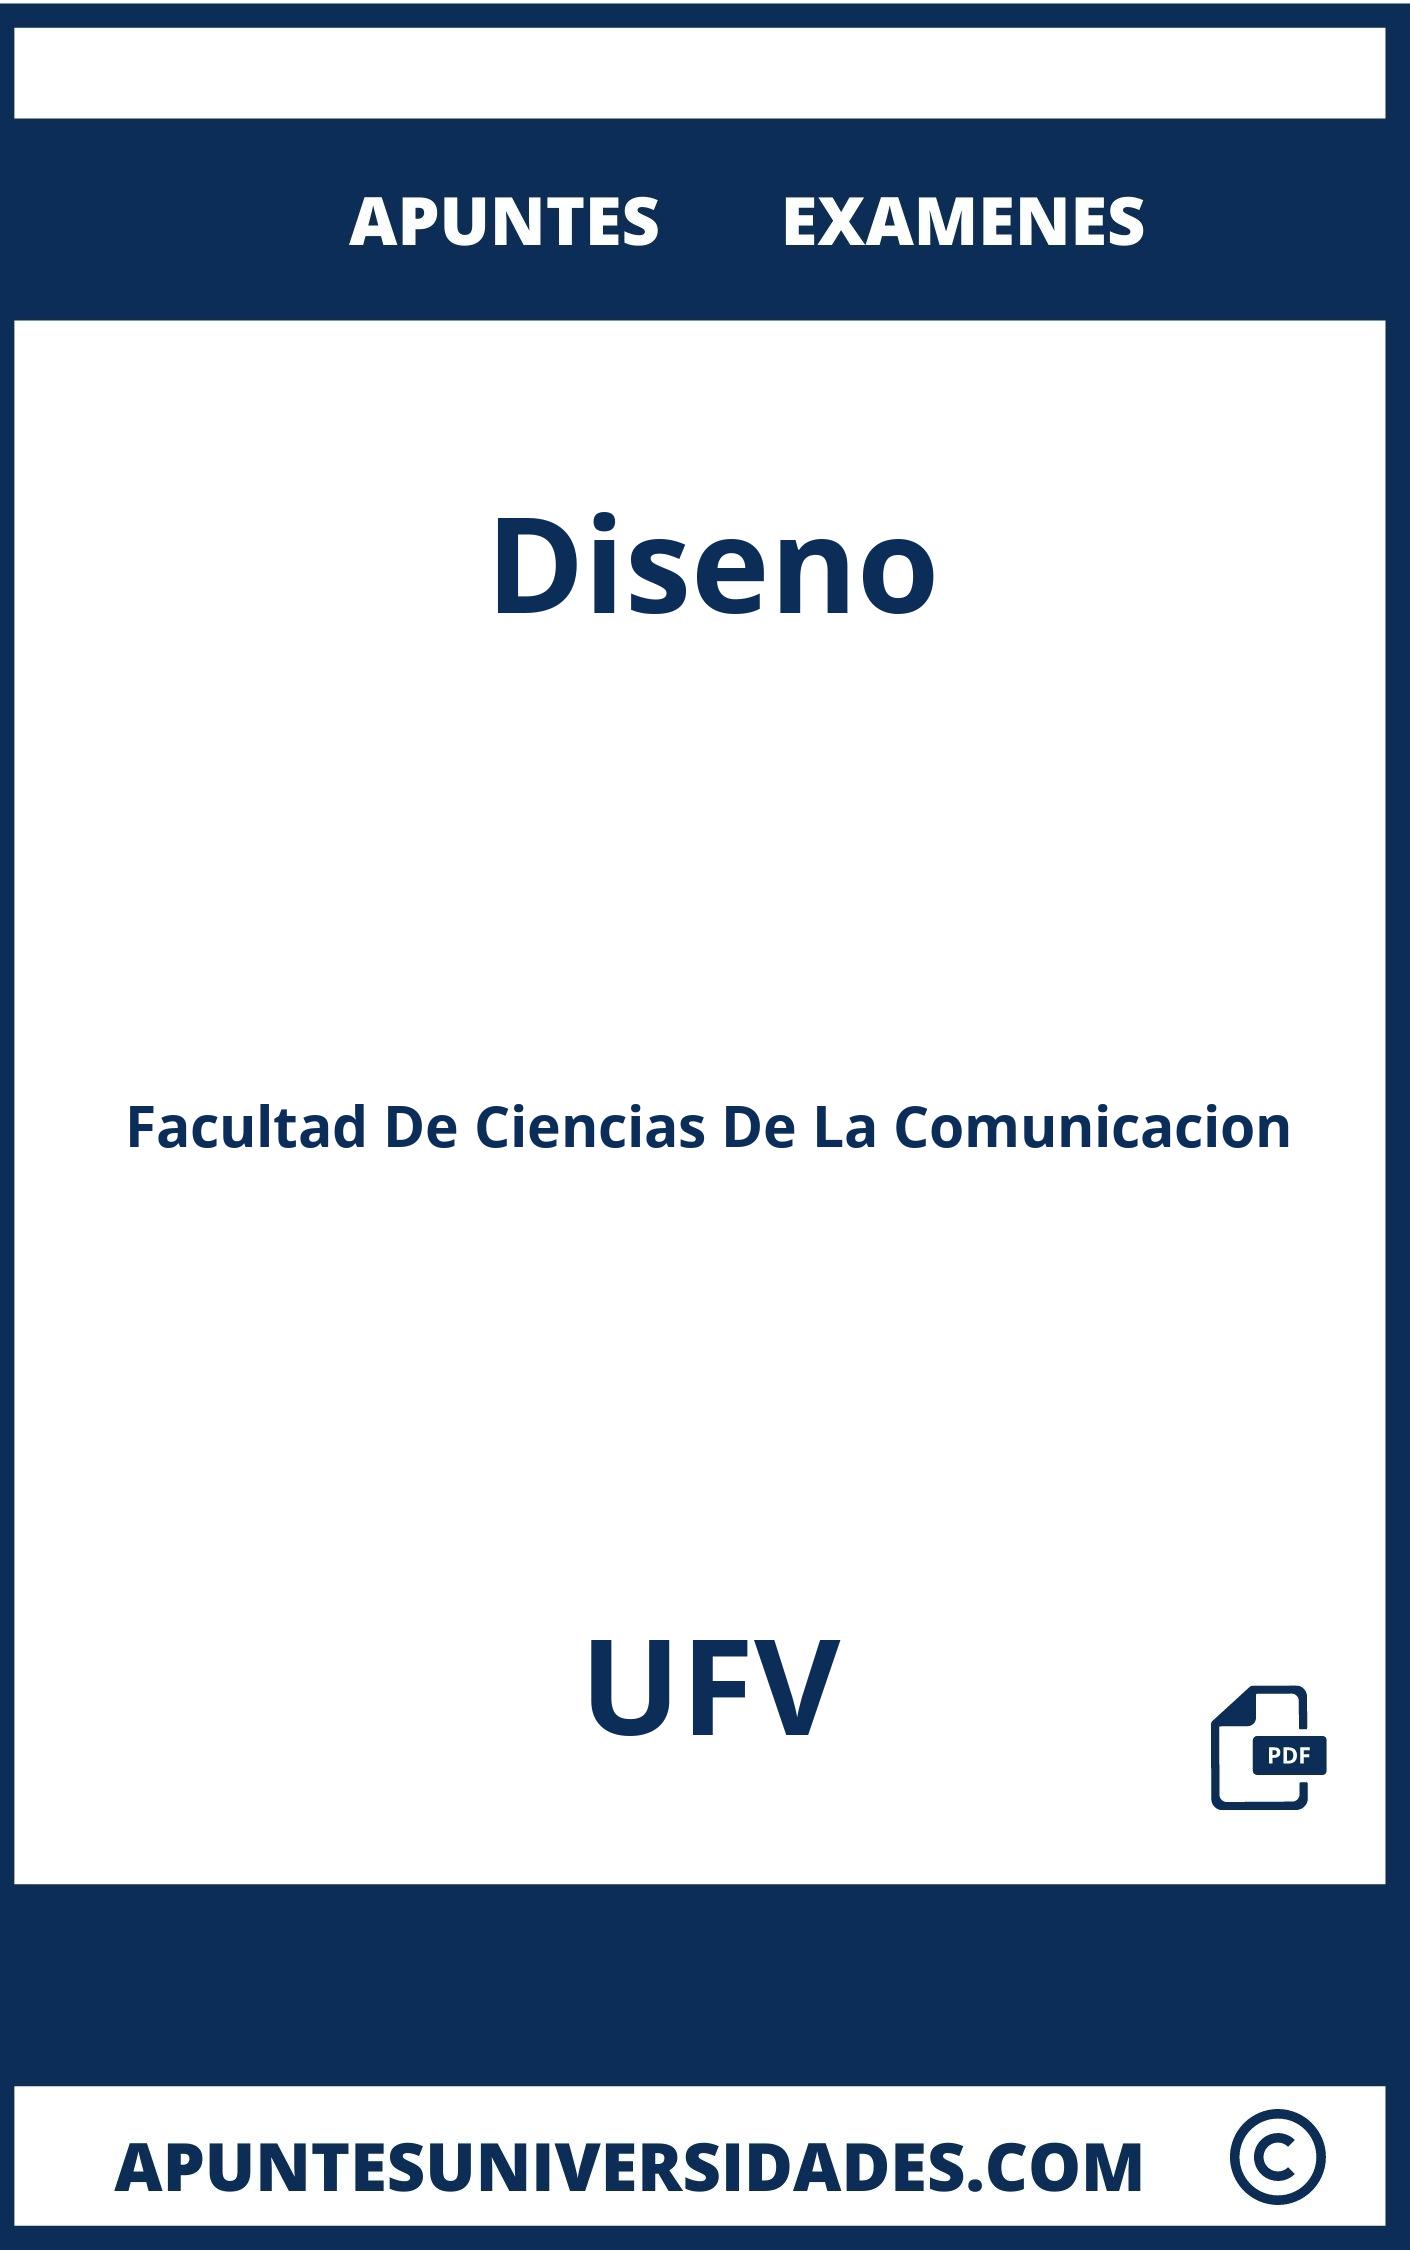 Apuntes y Examenes Diseno UFV